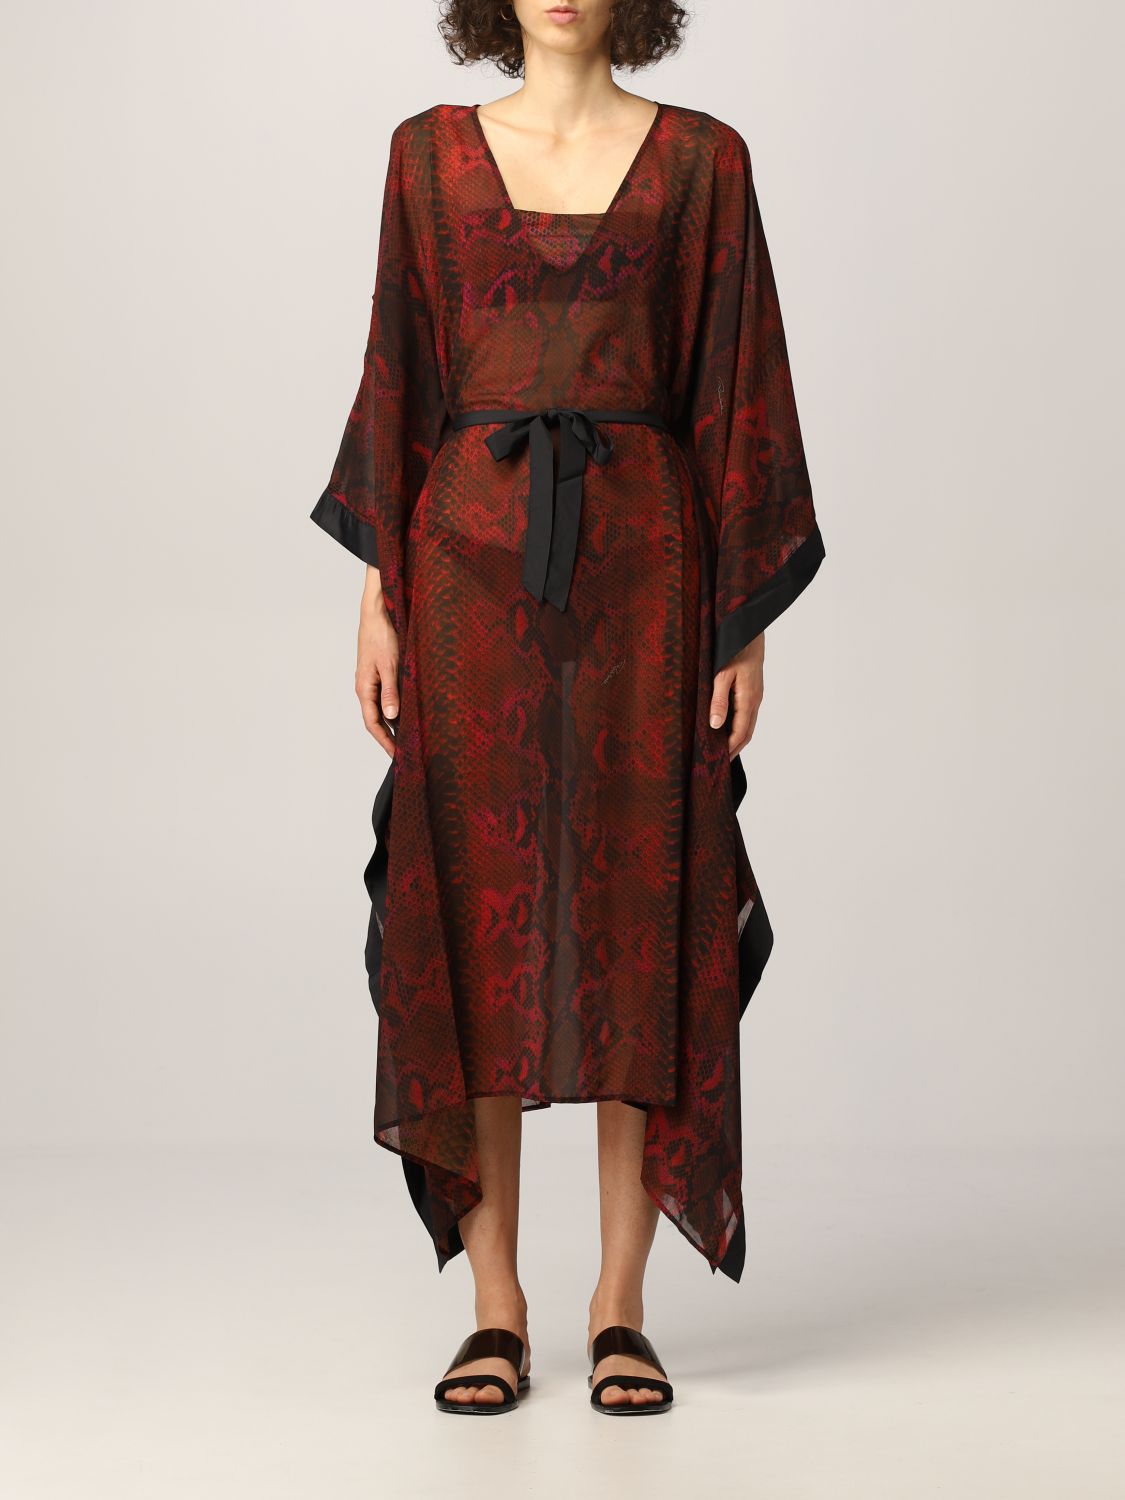 werkwoord raket Memo Roberto Cavalli Outlet: dress for woman - Red | Roberto Cavalli dress  HSW02K-A608 online on GIGLIO.COM